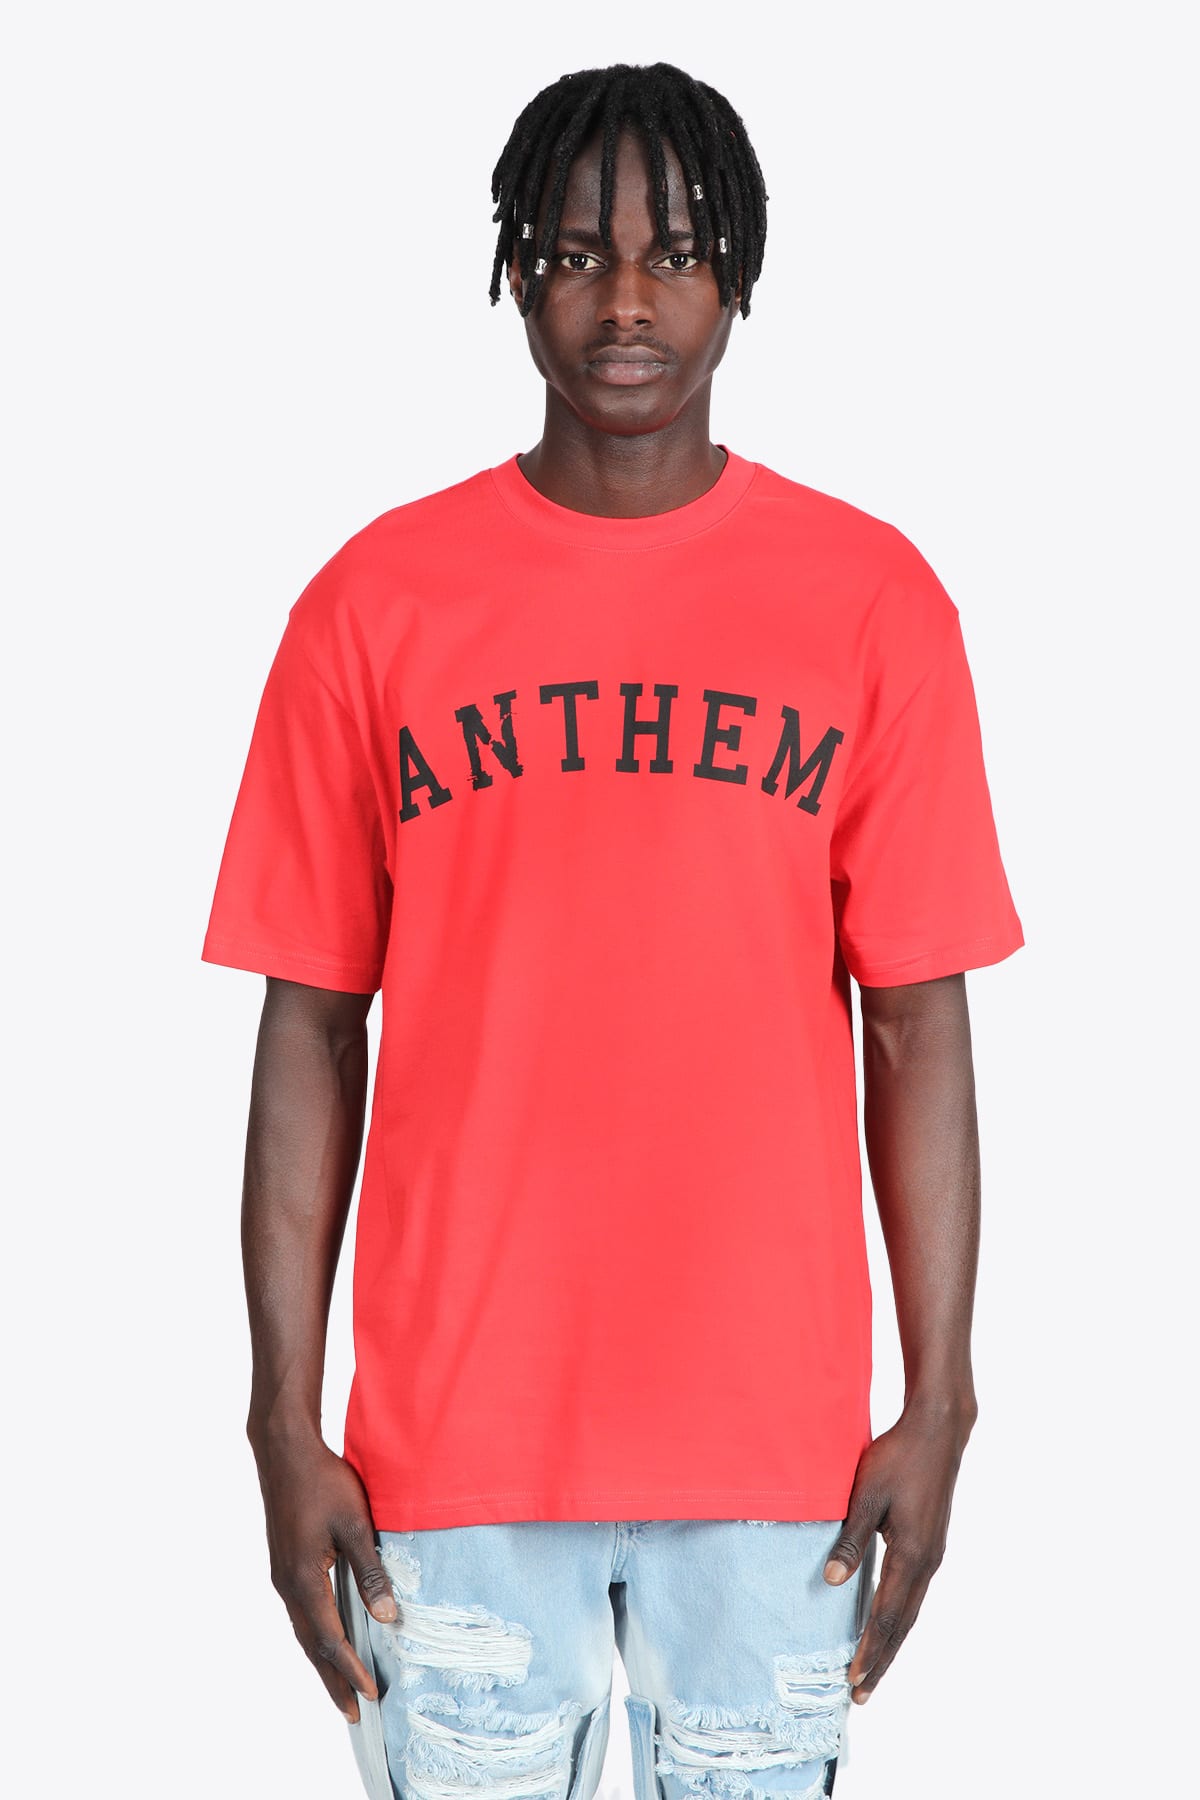 032c Anthem Tee Red cotton Anthem t-shirt - Anthem tee